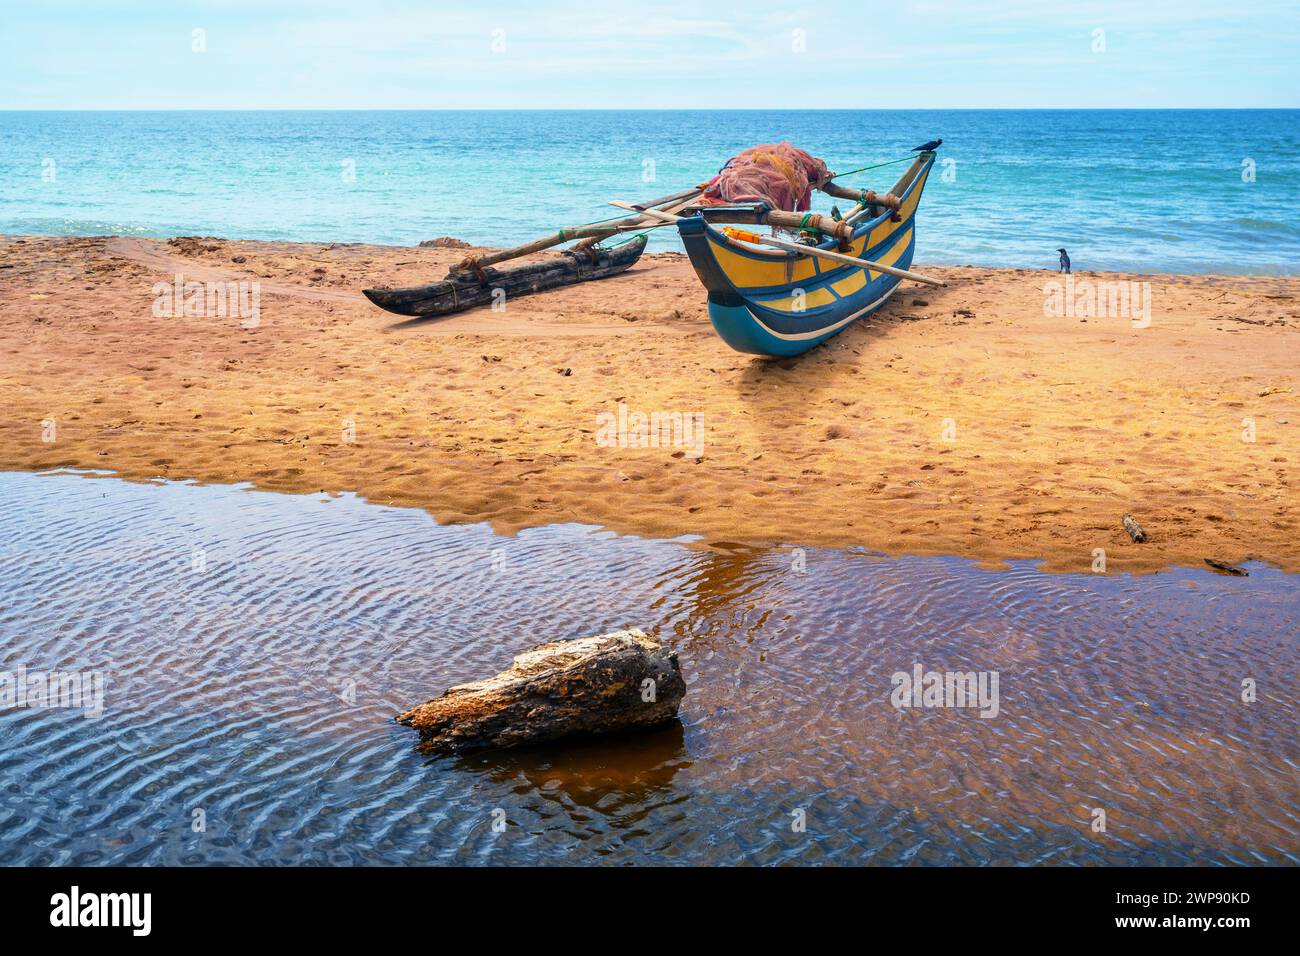 Small fishing boat with fishing net on beach with bird. Sri Lanka. Stock Photo